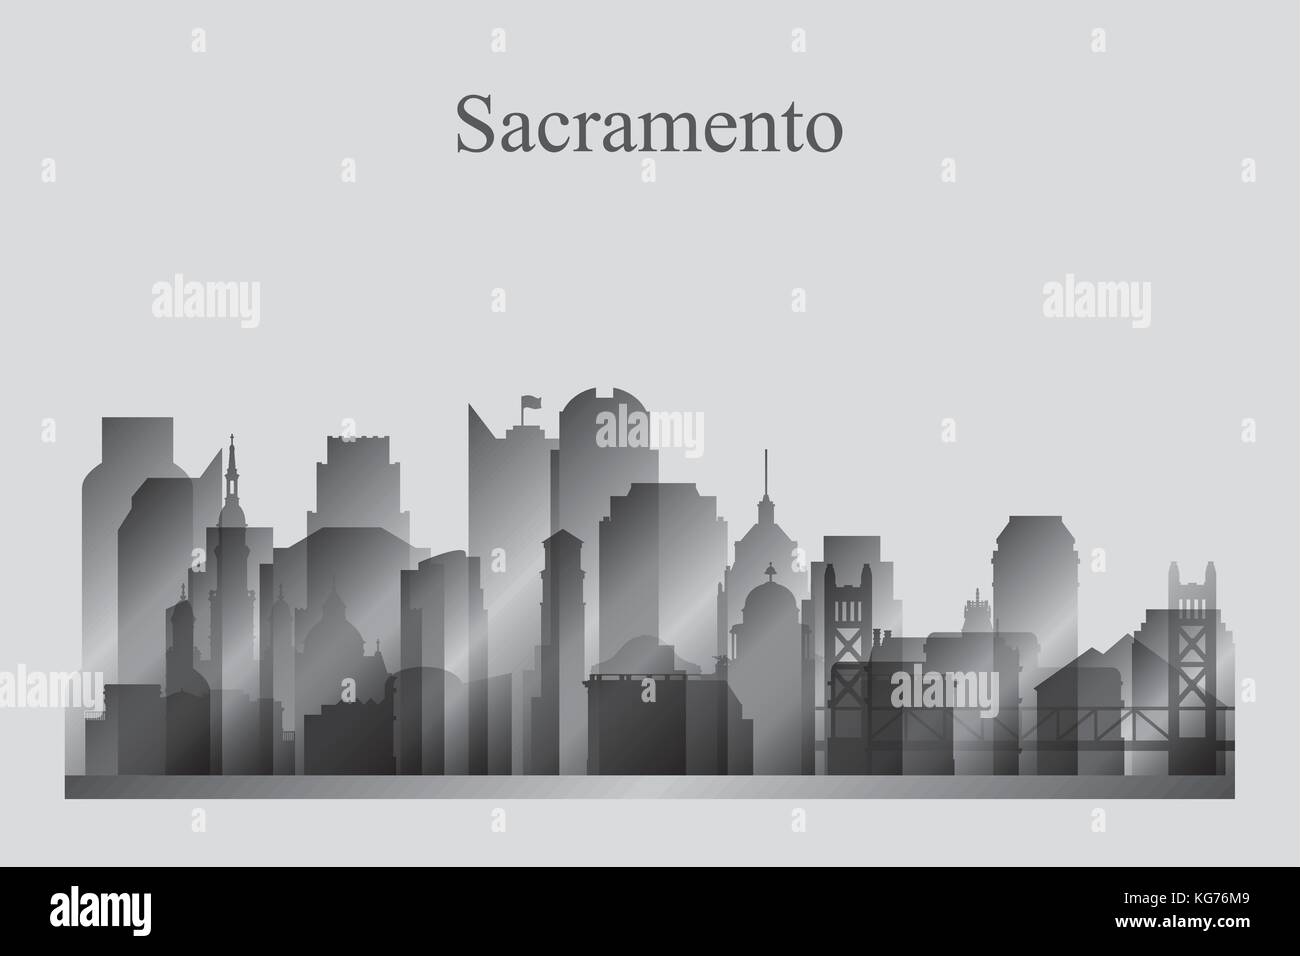 Sacramento city skyline silhouette in grayscale vector illustration Stock Vector